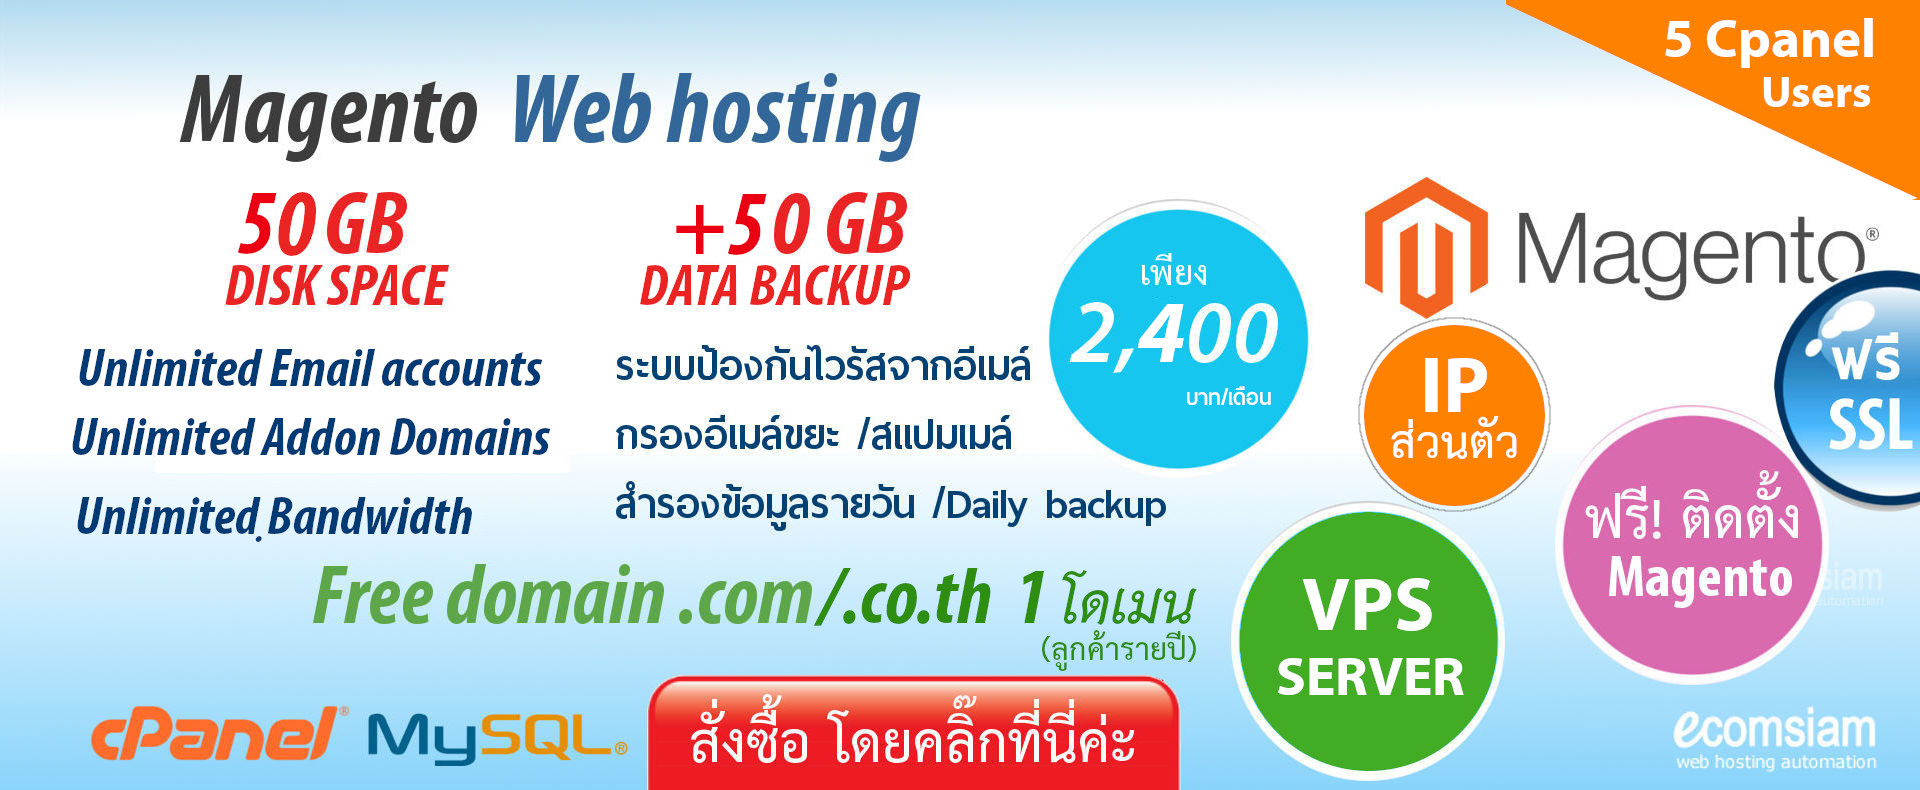 web hosting thailand แนะนำ magento web hosting - vps server เพียง 2,400 บ./เดือน  พิเศษสุดๆ ลูกค้ารายปีชำระเพียง 11 เดือน และ ฟรี จดโดเมน หรือต่ออายุโดเมนตลอดการใช้งาน เว็บโฮสติ้งไทย ฟรี โดเมน ฟรี SSL ฟรีติดตั้ง แนะนำเว็บโฮสติ้ง บริการลูกค้า  Support ดูแลดี โดย webhostthai.com - magento web hosting thailand free domain